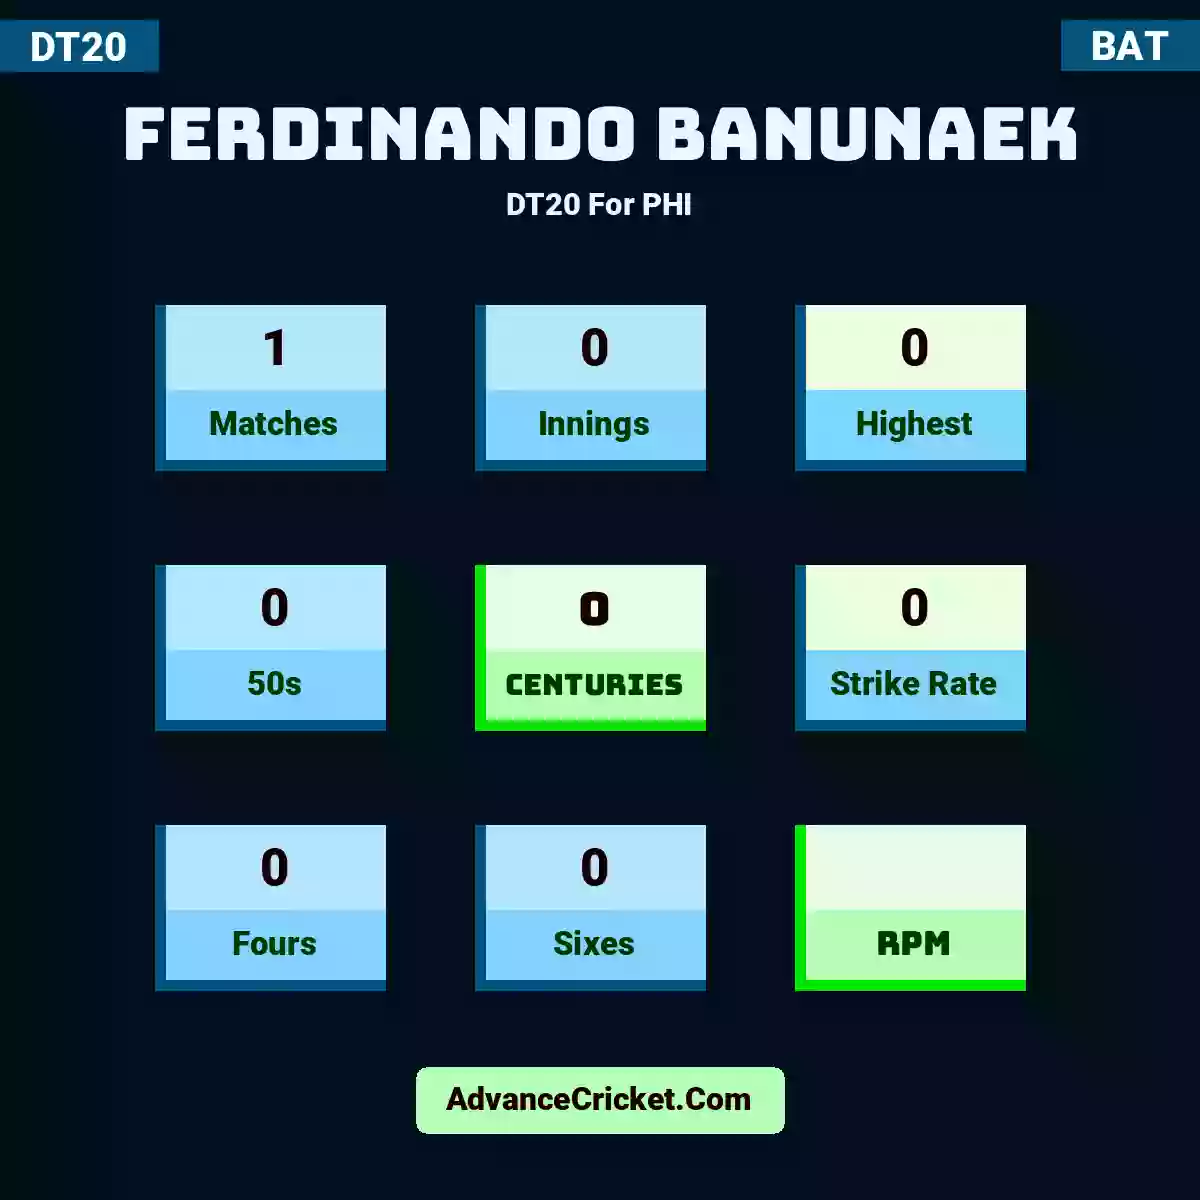 Ferdinando Banunaek DT20  For PHI, Ferdinando Banunaek played 1 matches, scored 0 runs as highest, 0 half-centuries, and 0 centuries, with a strike rate of 0. F.Banunaek hit 0 fours and 0 sixes.